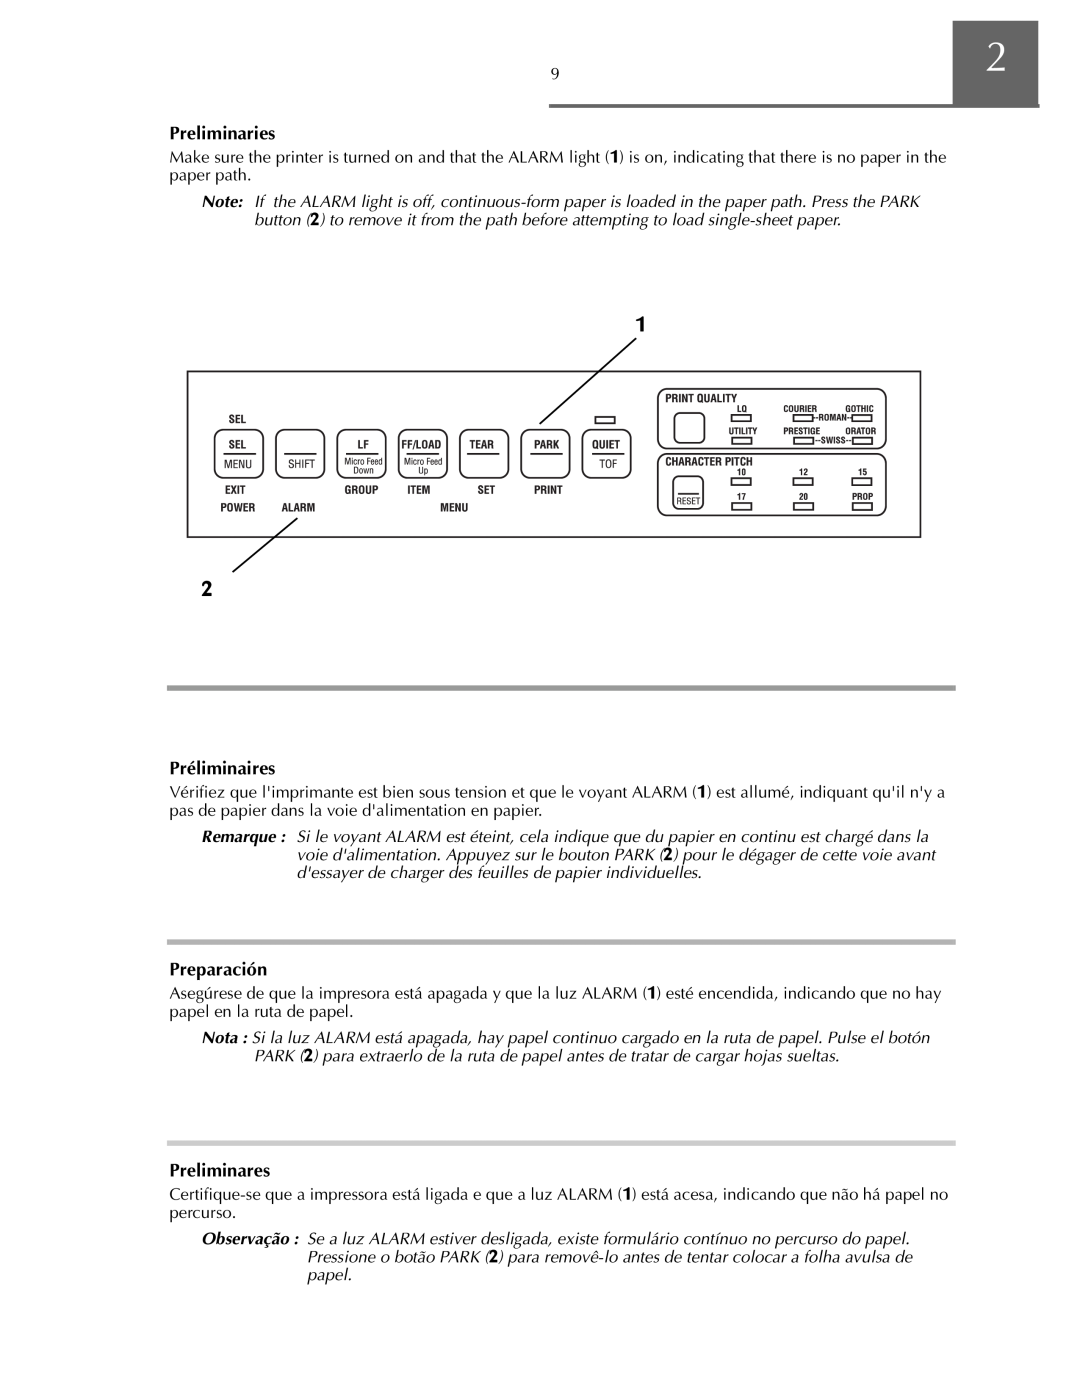 Oki ML590 manual Preliminaries, Préliminaires, Preparación, Preliminares 